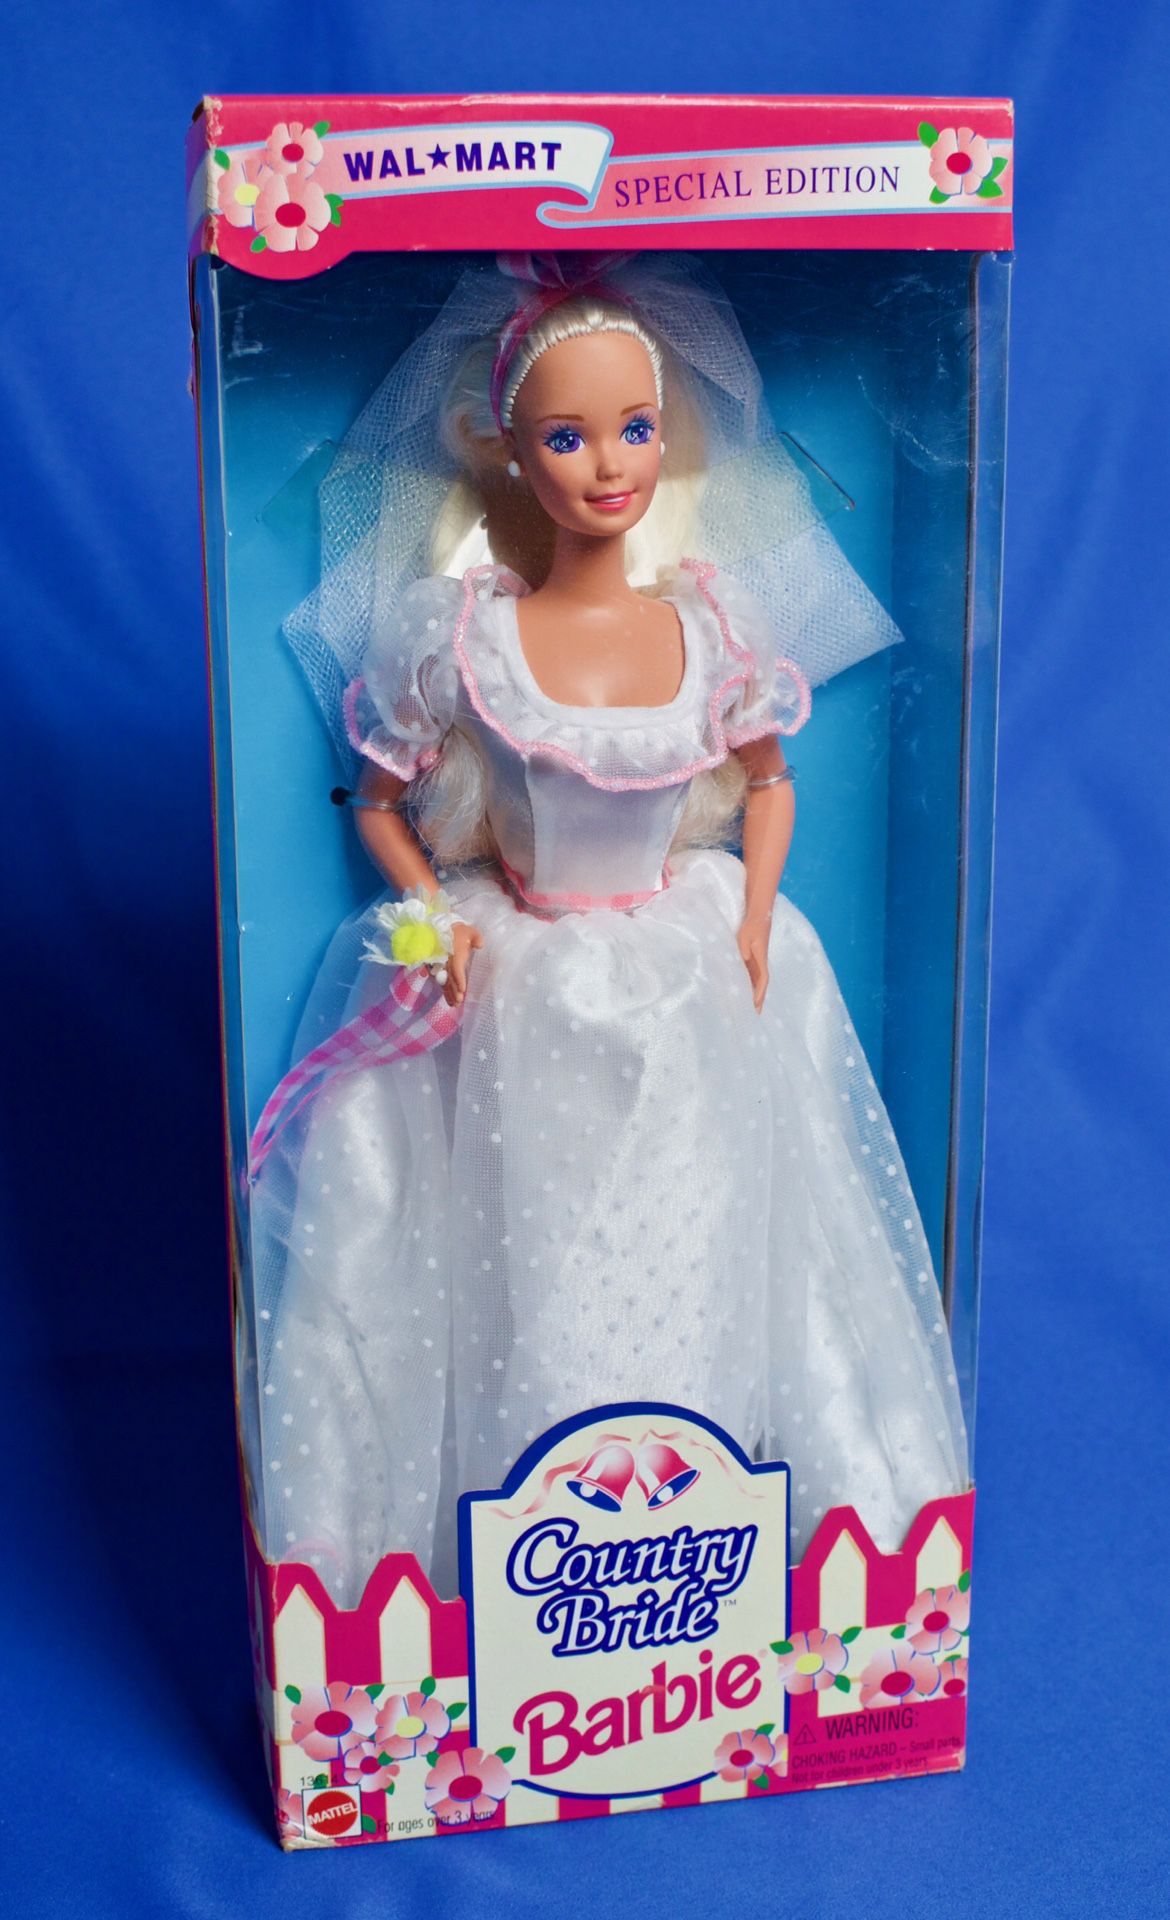 Barbie "Country Bride". Special edition, 1994